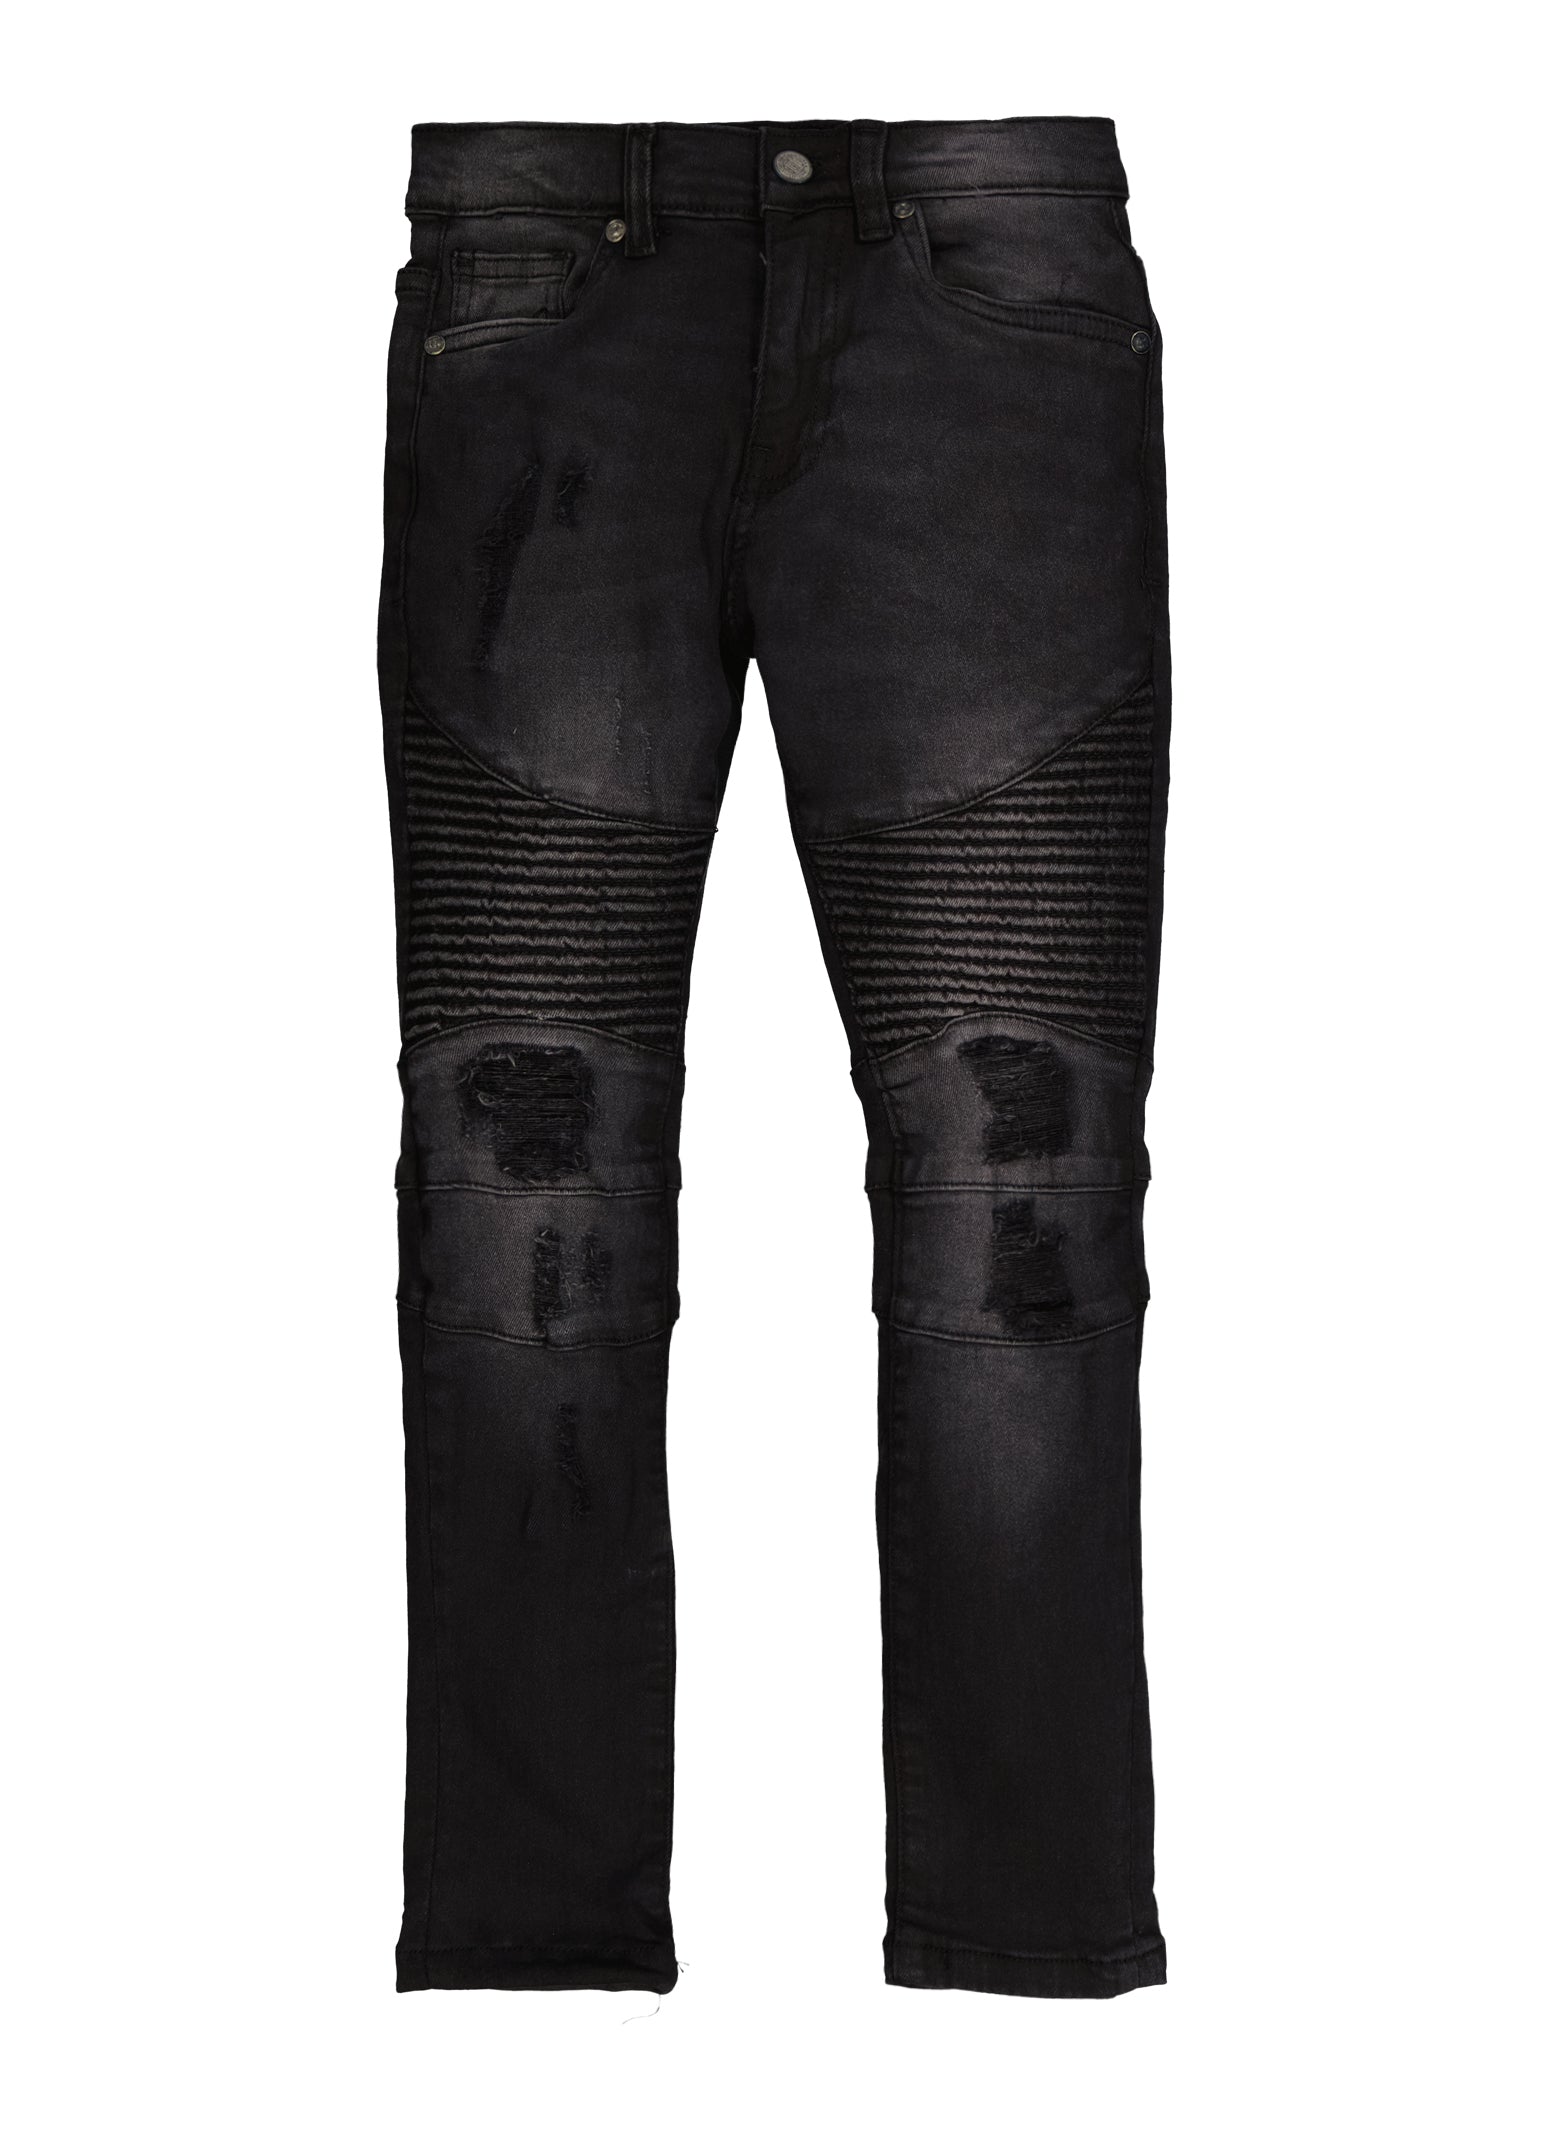 Boys Distressed Moto Skinny Jeans, Black, Size 14